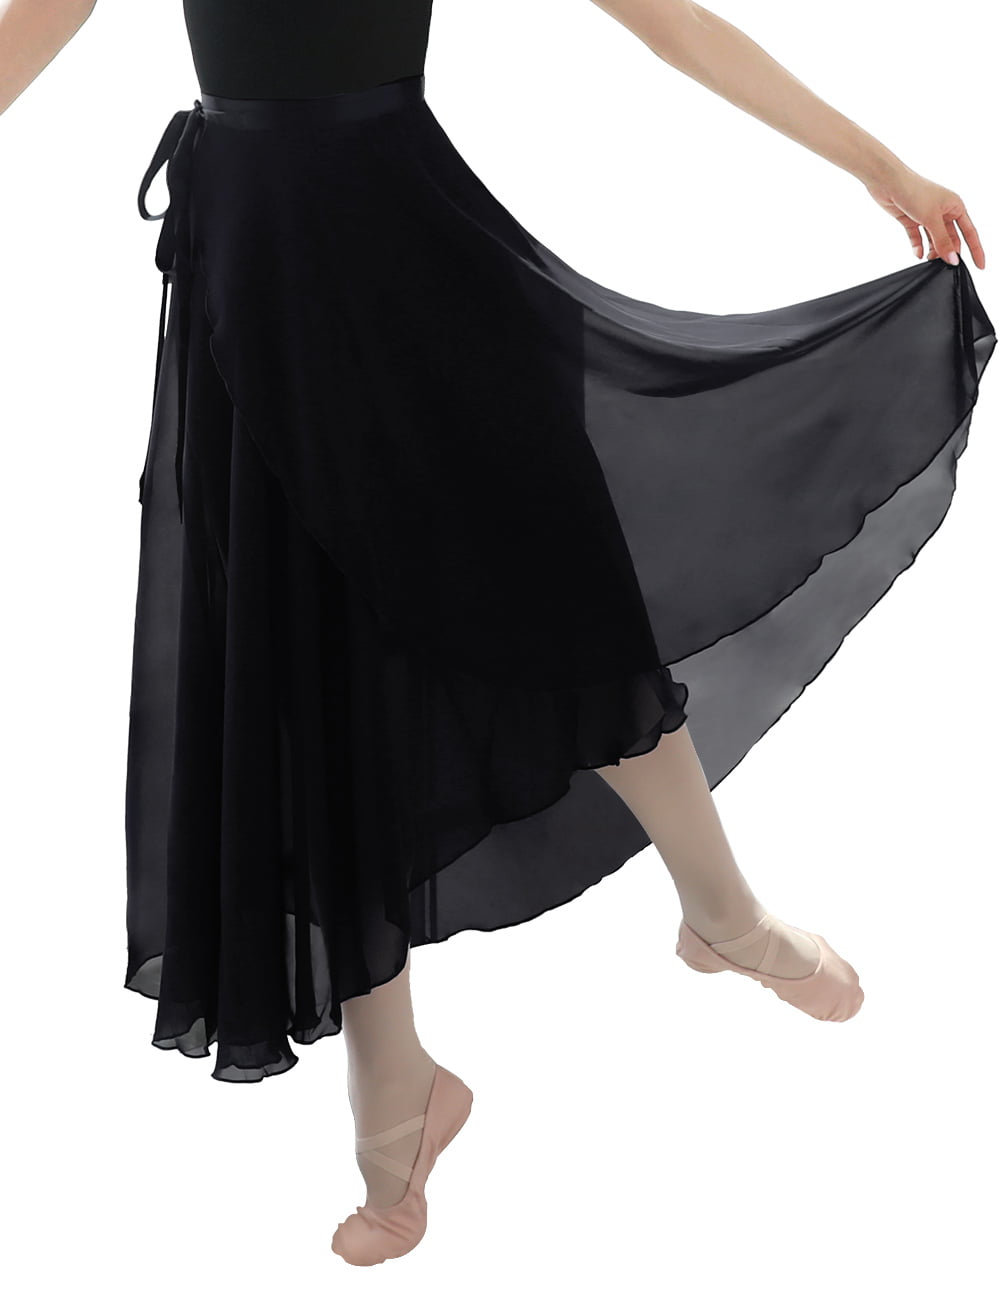 NEW Romantic Tulle Chiffon 3 Layer Ballet Ballroom Black Skirtw/Trunks Ad/Child 